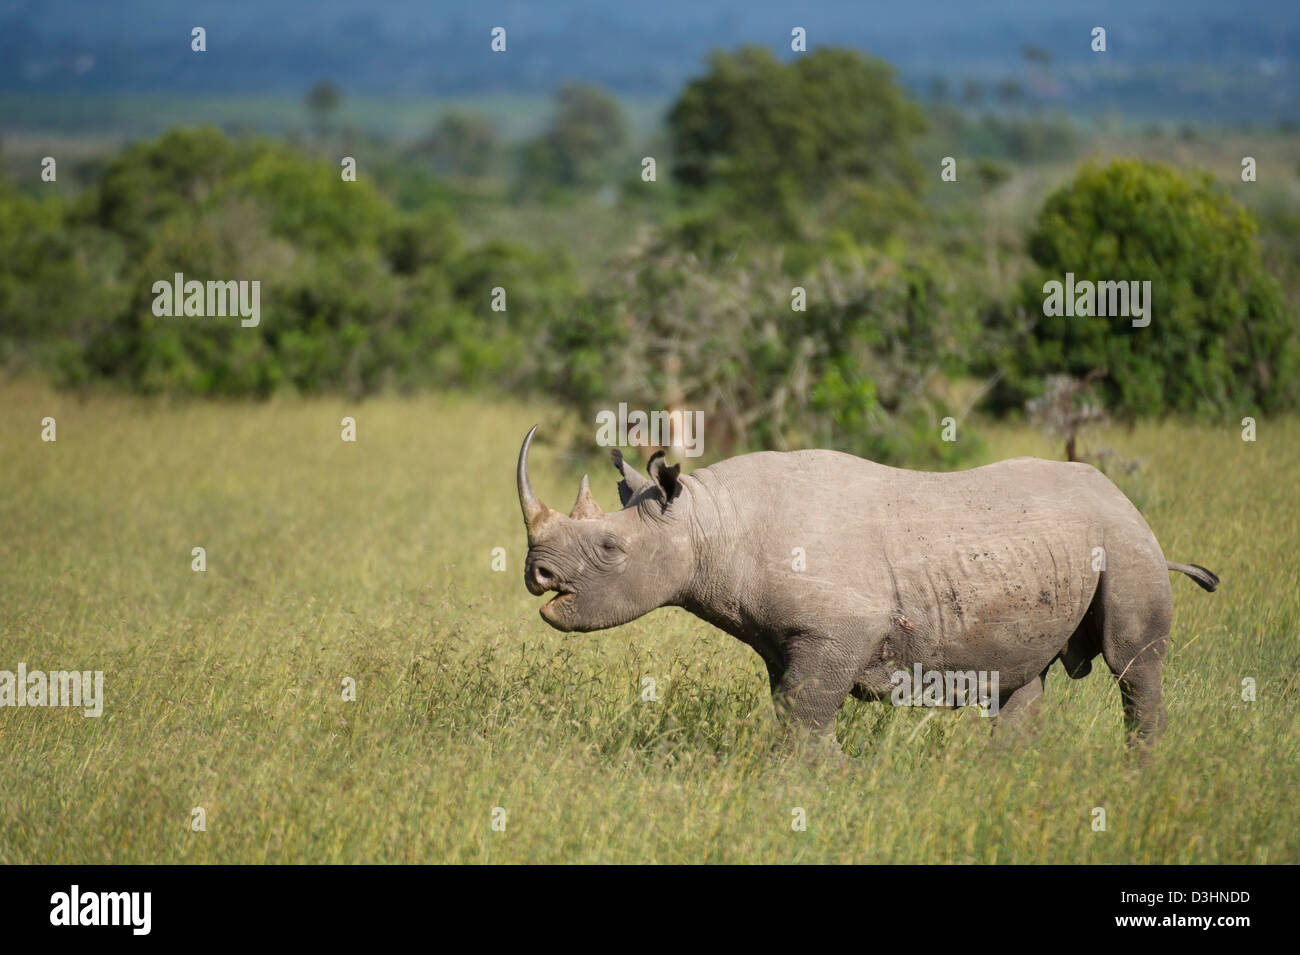 Le rhinocéros noir (Diceros bicornis), Ol Pejeta Wildlife Conservancy, Laikipia, Kenya Banque D'Images